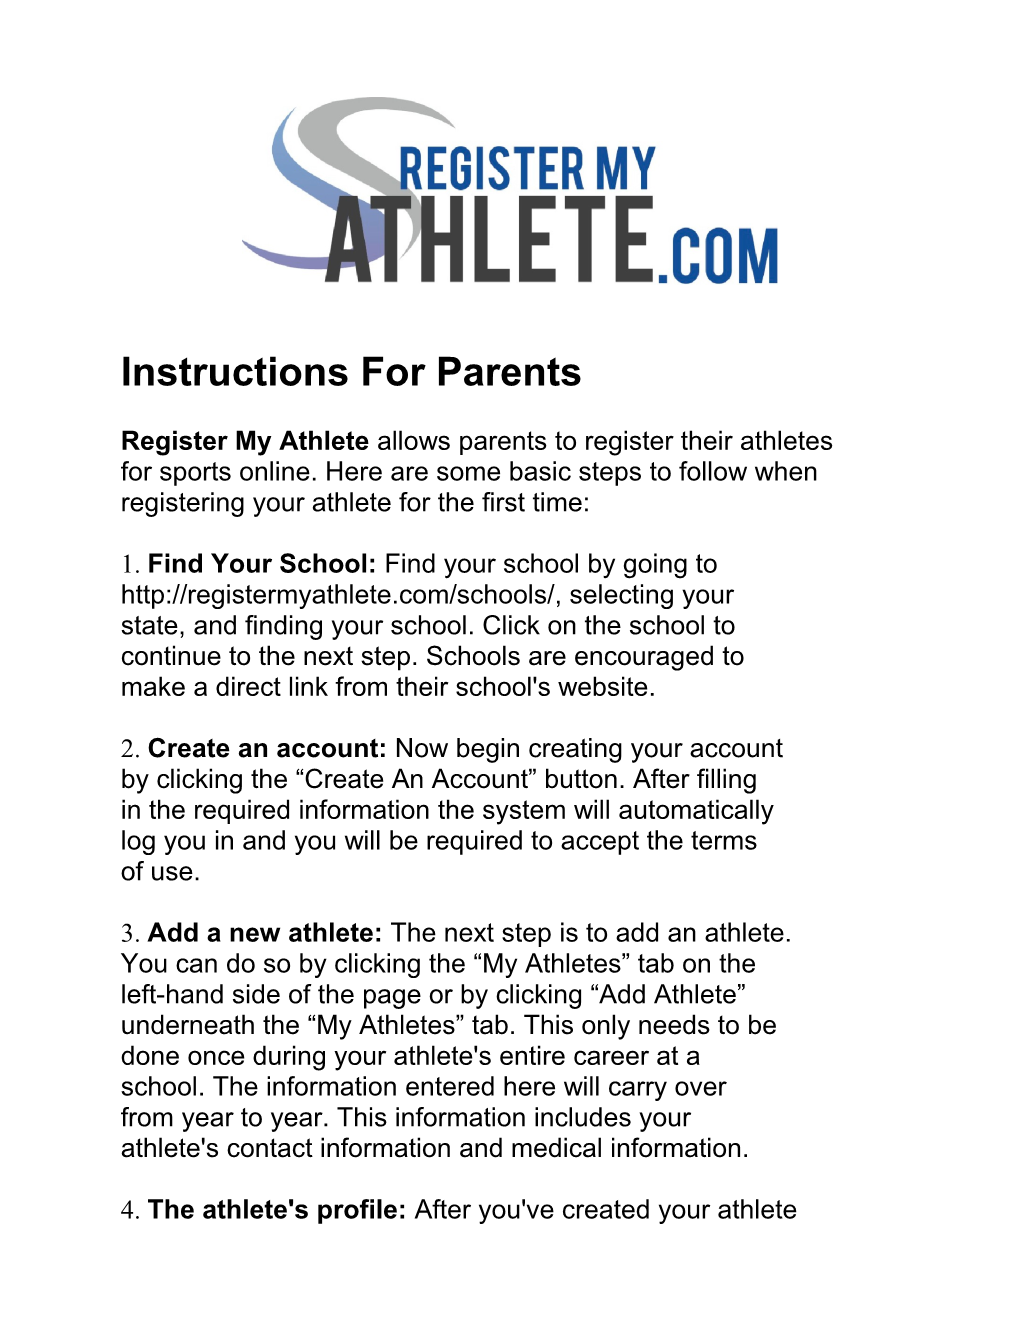 Instructions for Parents